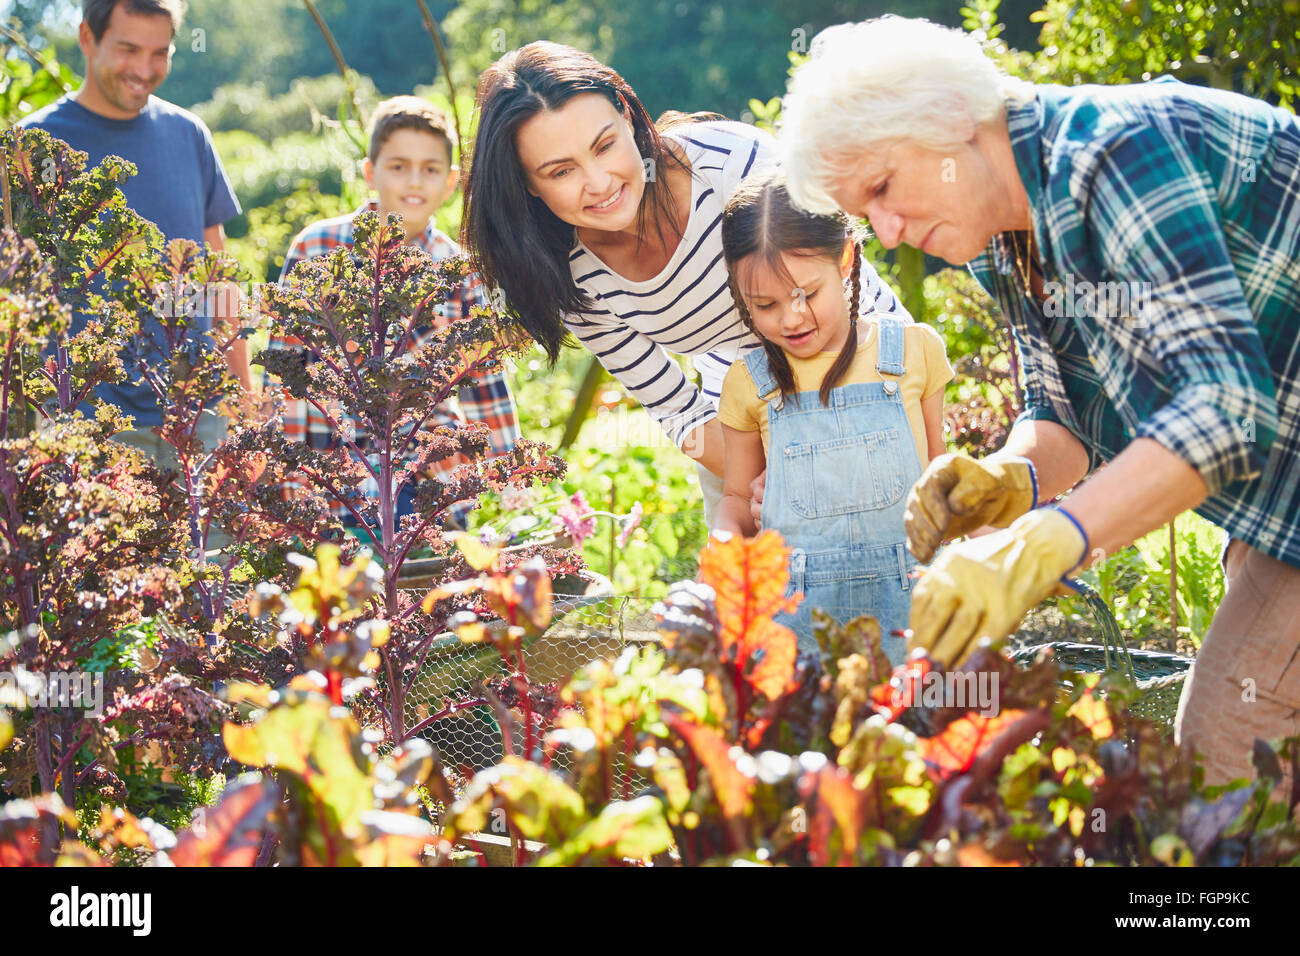 Multi-generation family in vegetable garden Stock Photo